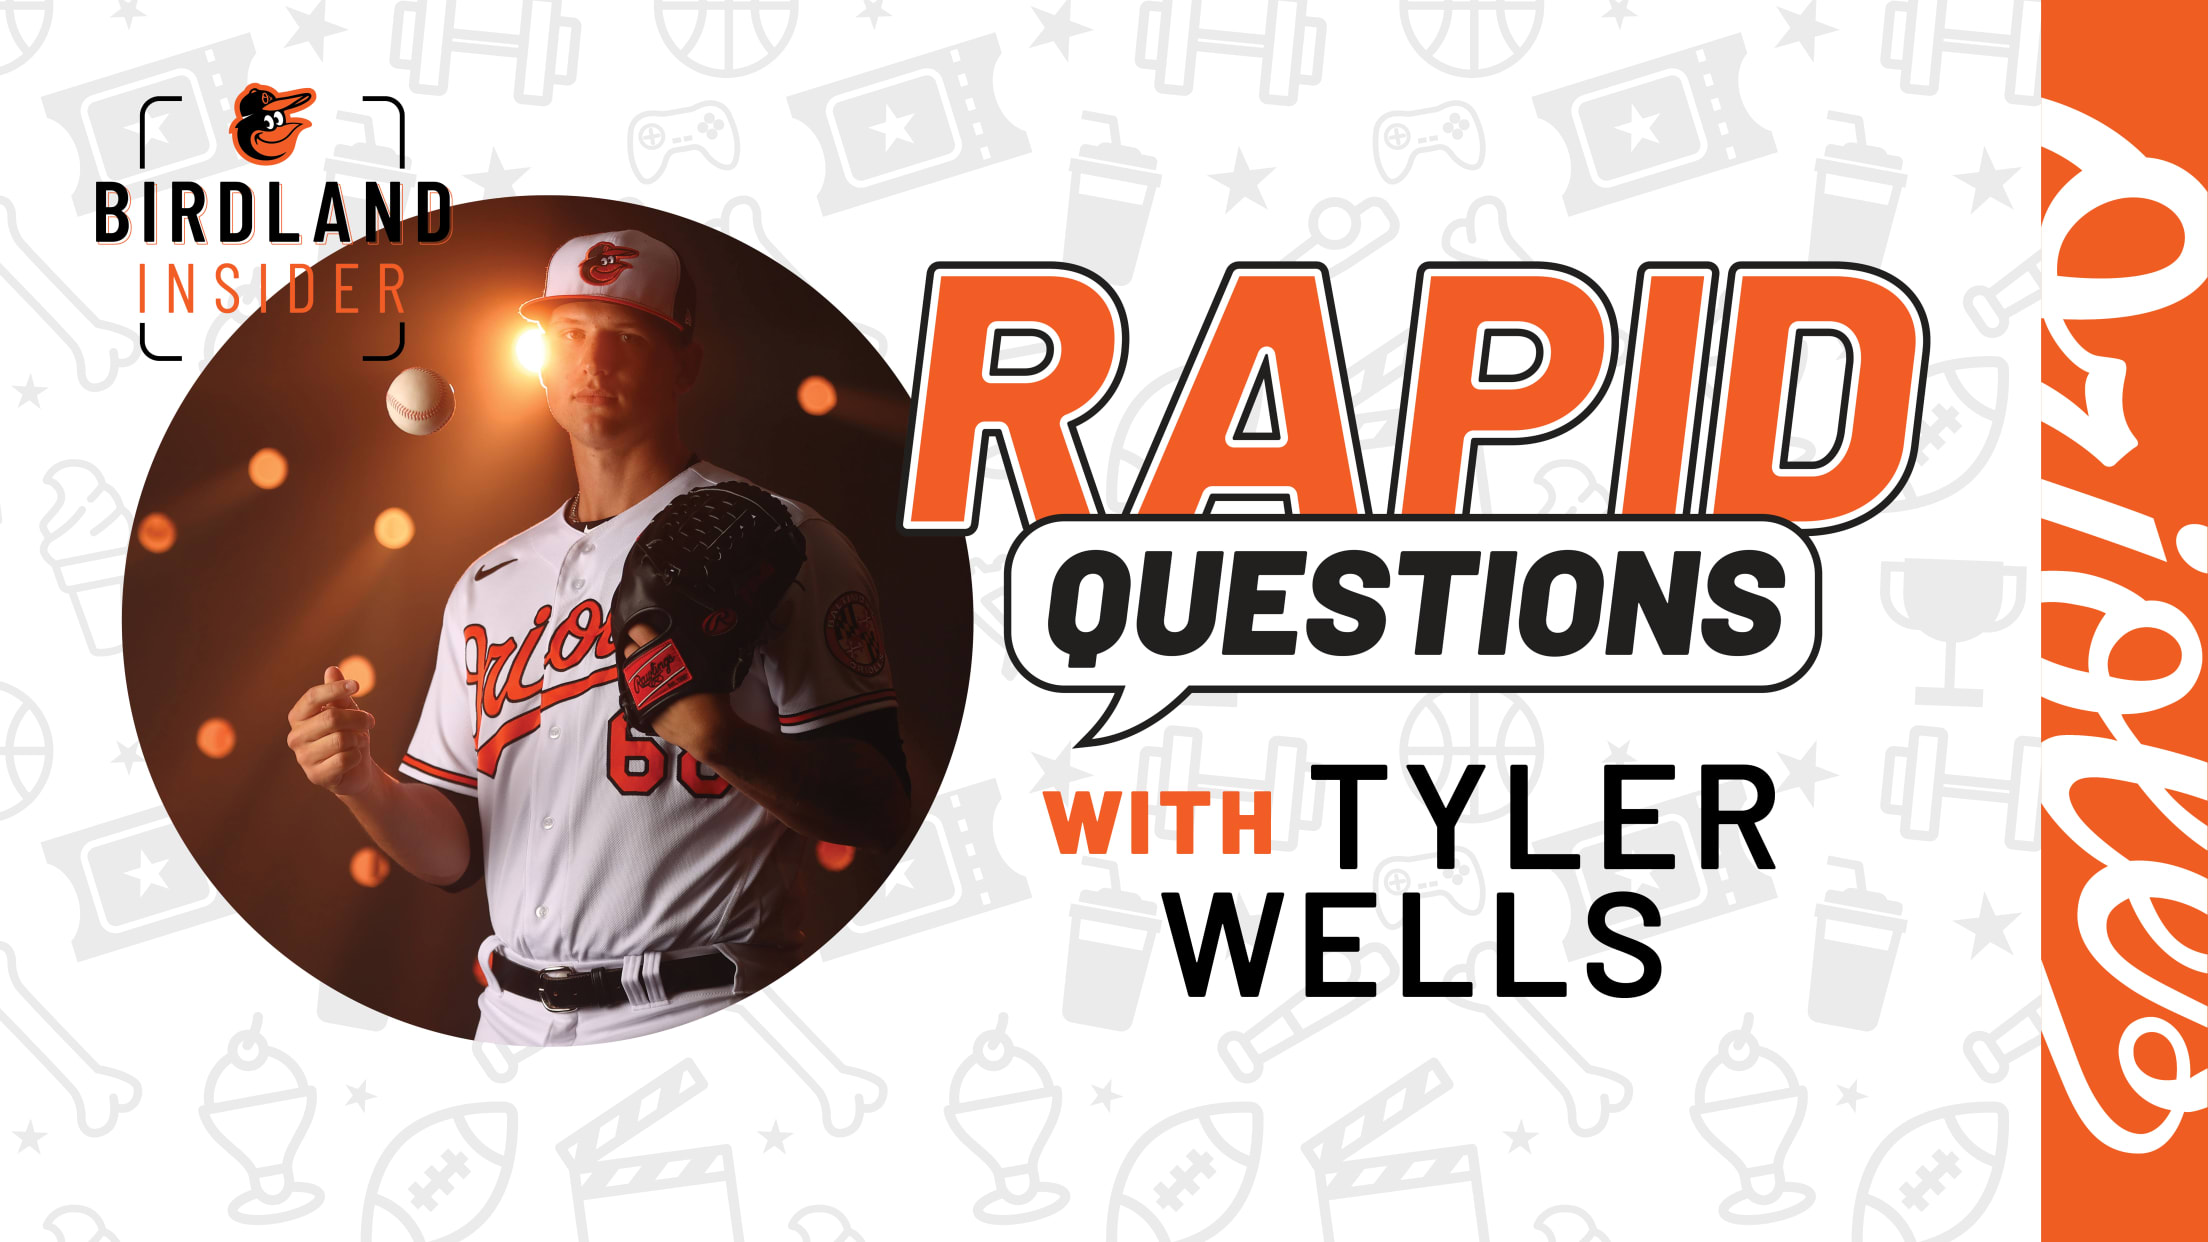 bal-rapid-questions-with-tyler-wells-header